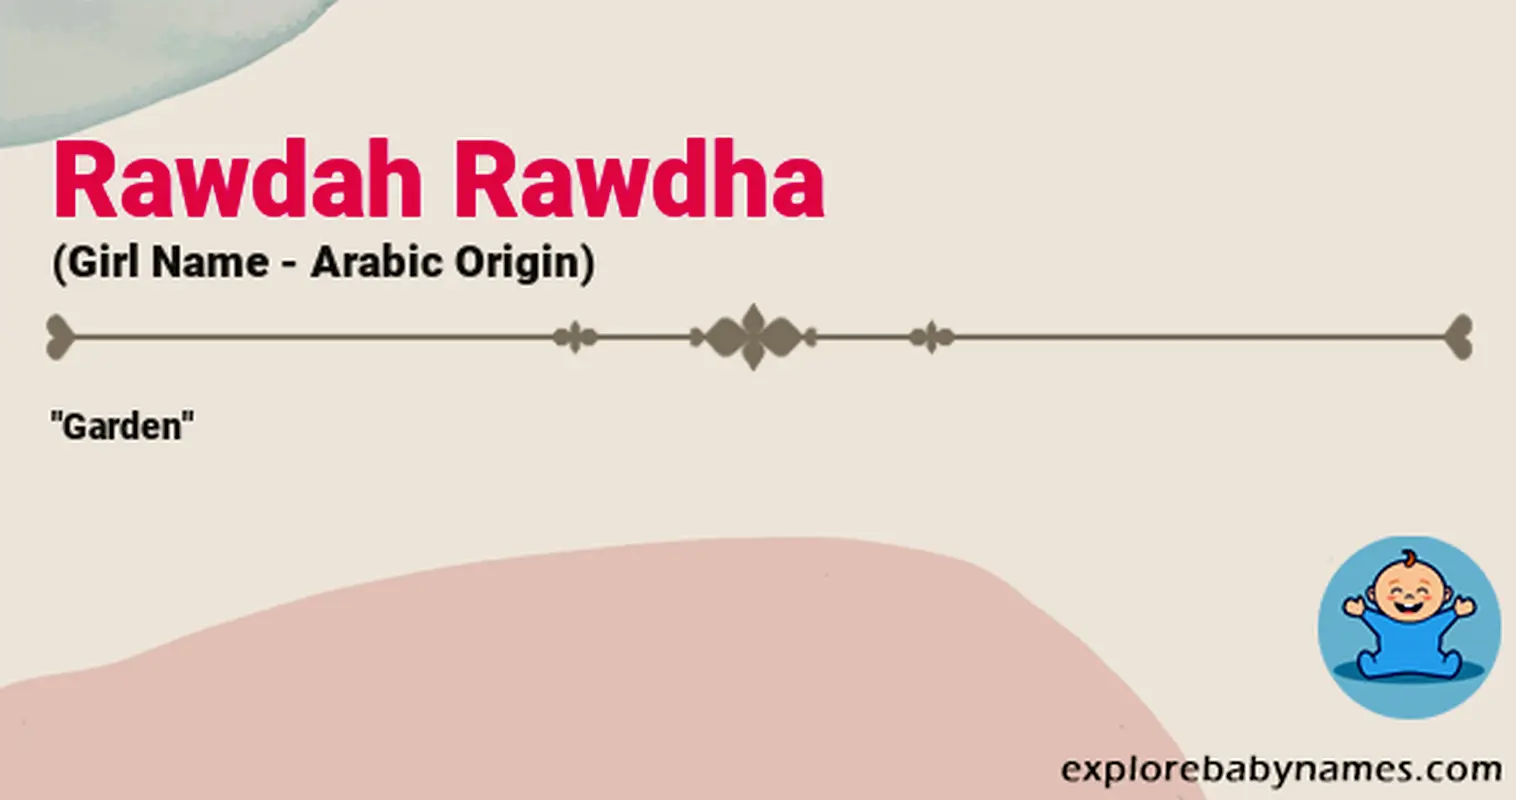 Meaning of Rawdah Rawdha